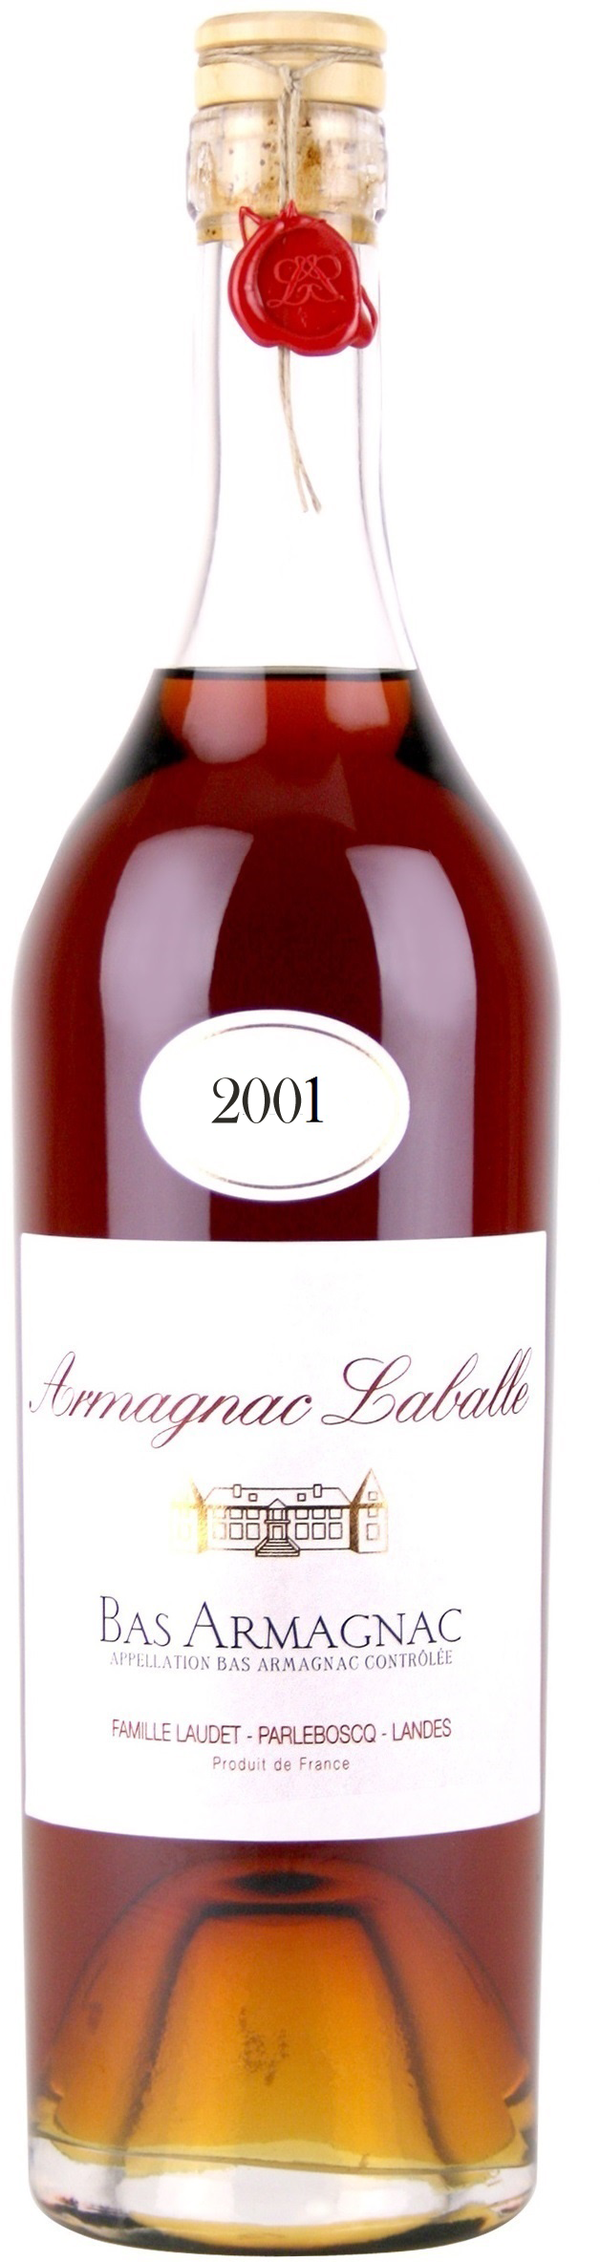 Château Laballe Bas Armagnac 2001